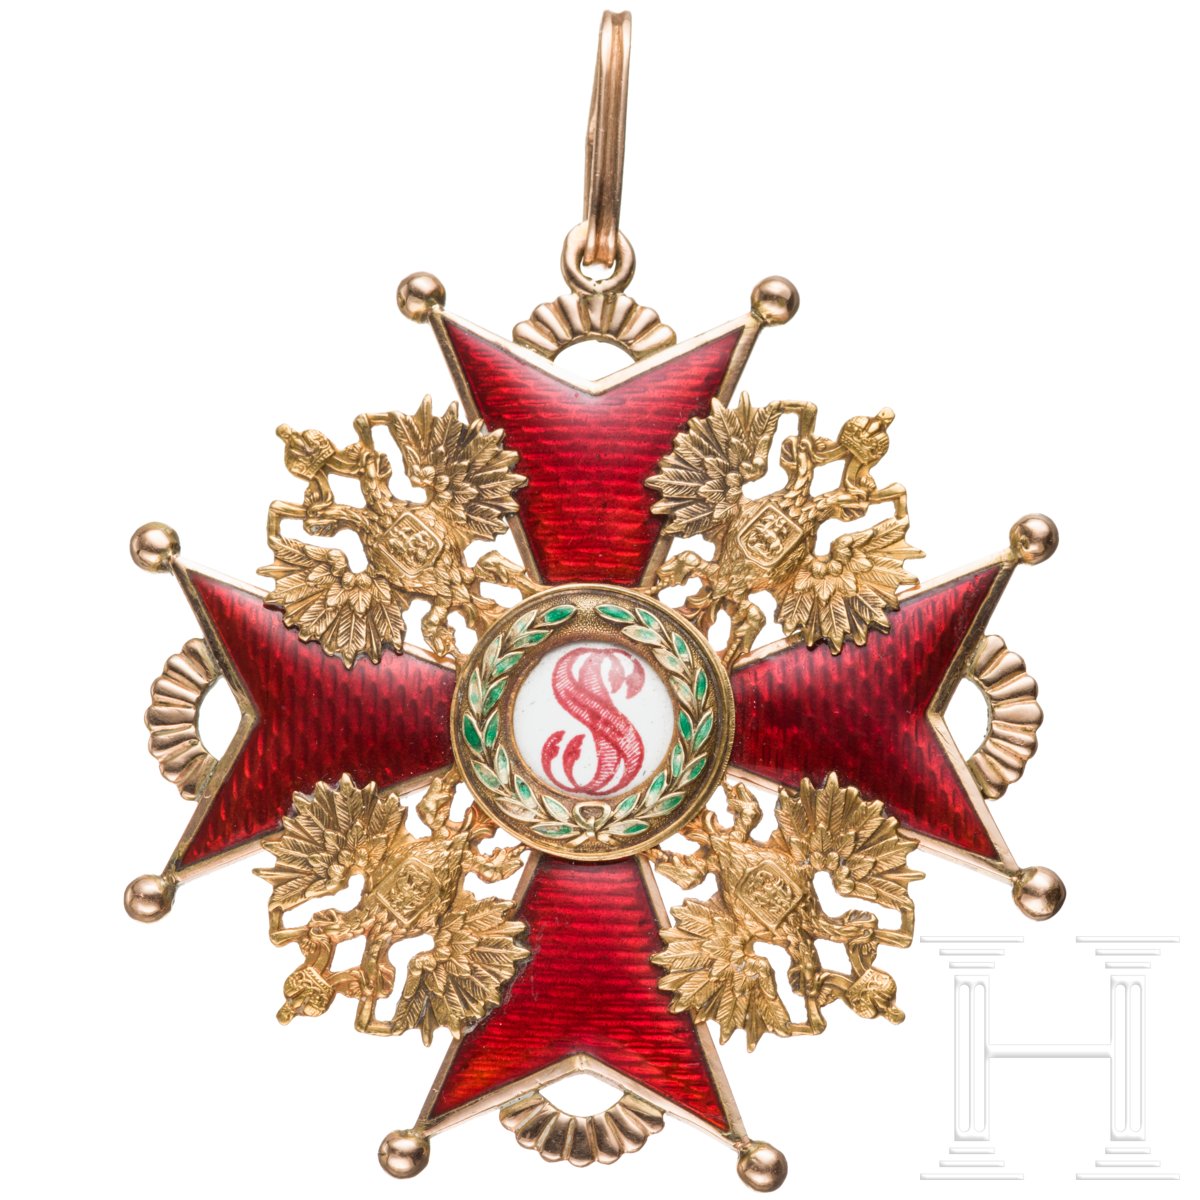 St. Stanislaus-Orden - Kreuz 1. Klasse, Russland, um 1910 - Image 2 of 5